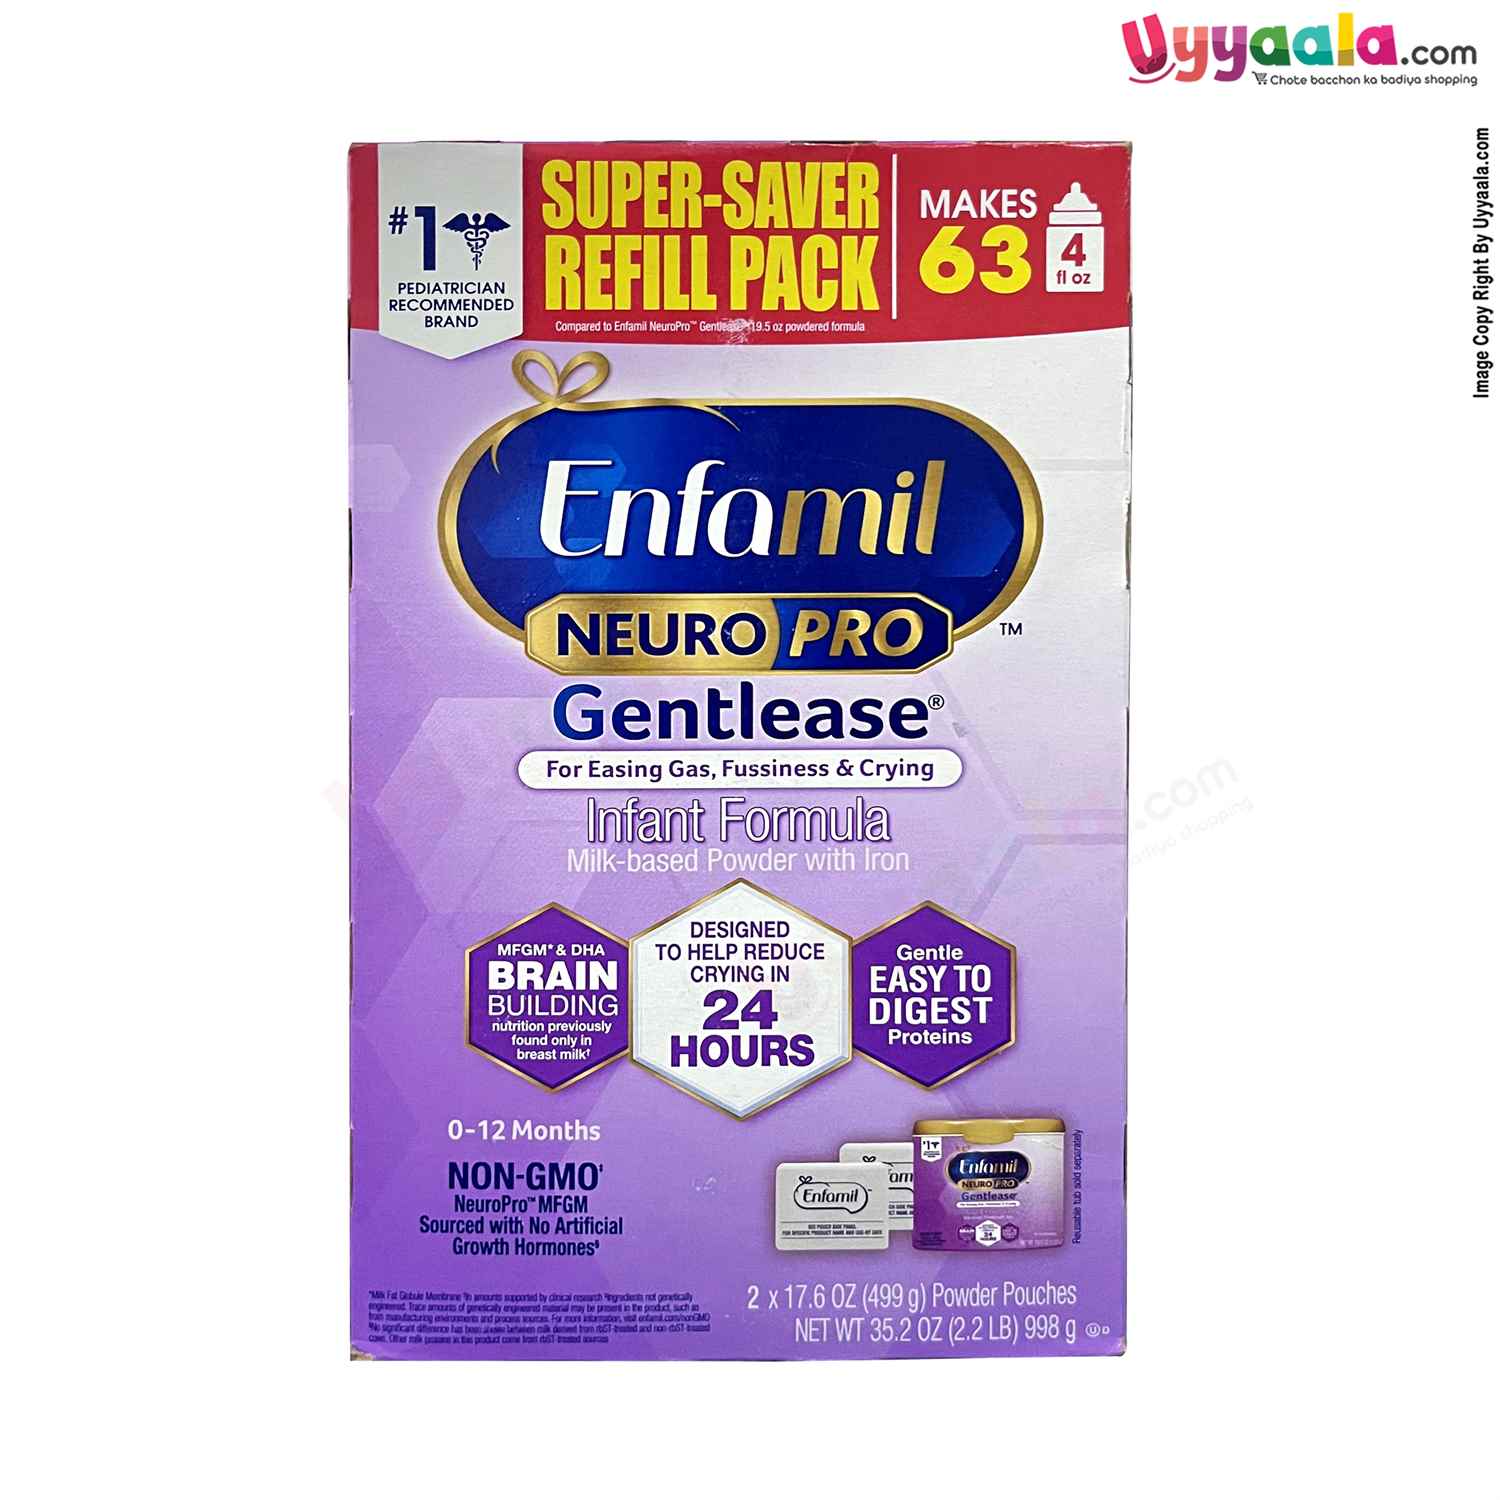 Buy Enfamil Neuro Pro Gentlease Infant Baby Milk Formula - 998gms (Refill Pack) Online in India at uyyaala.com